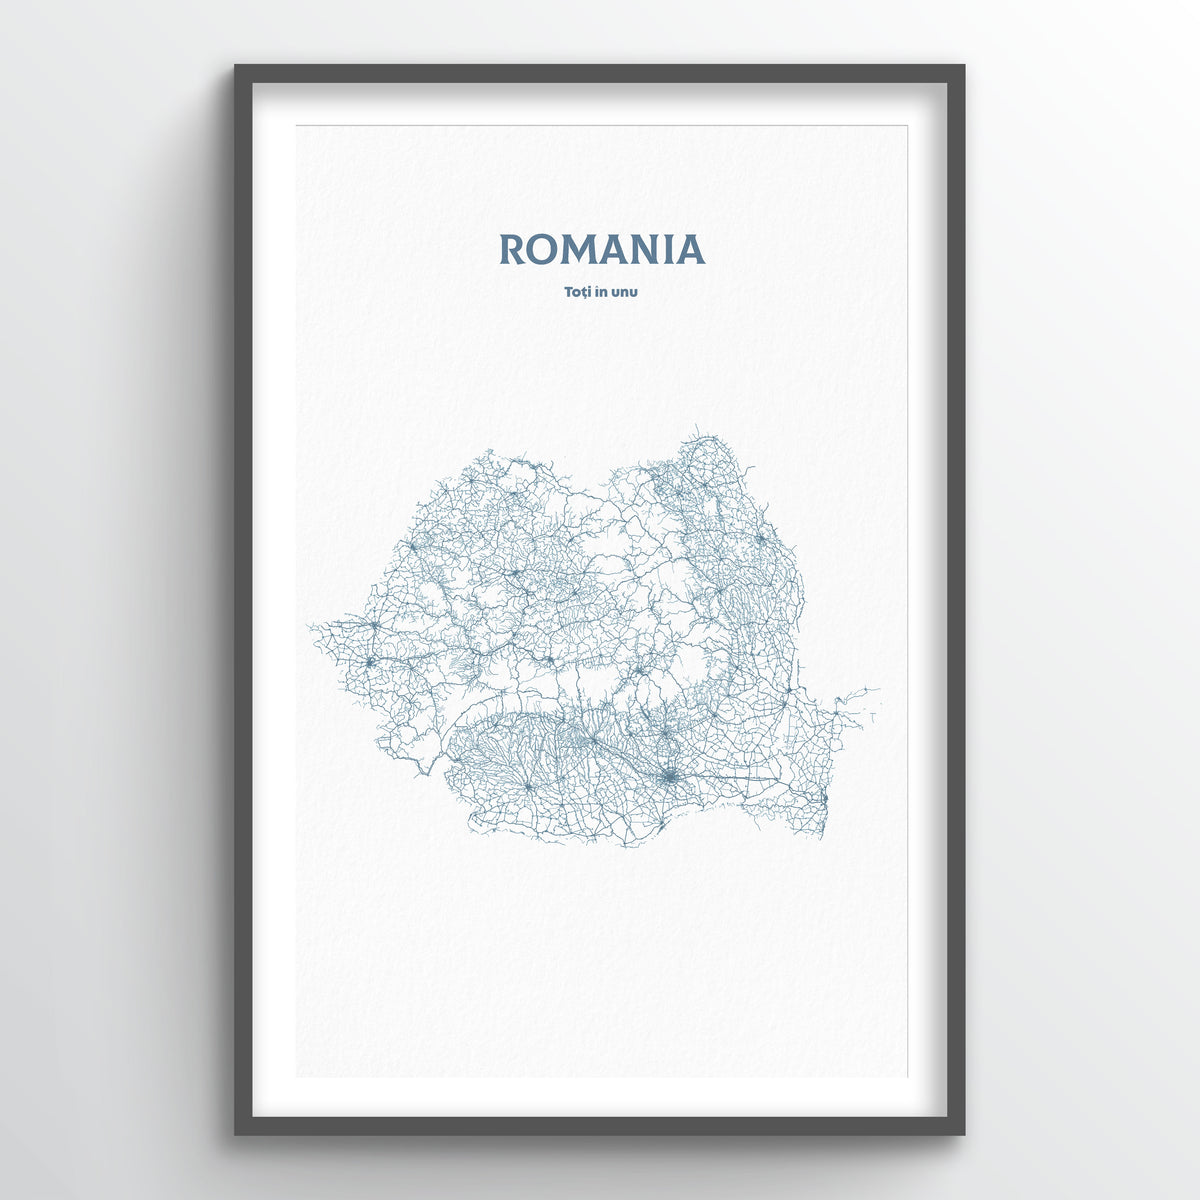 Romania - All Roads Art Print